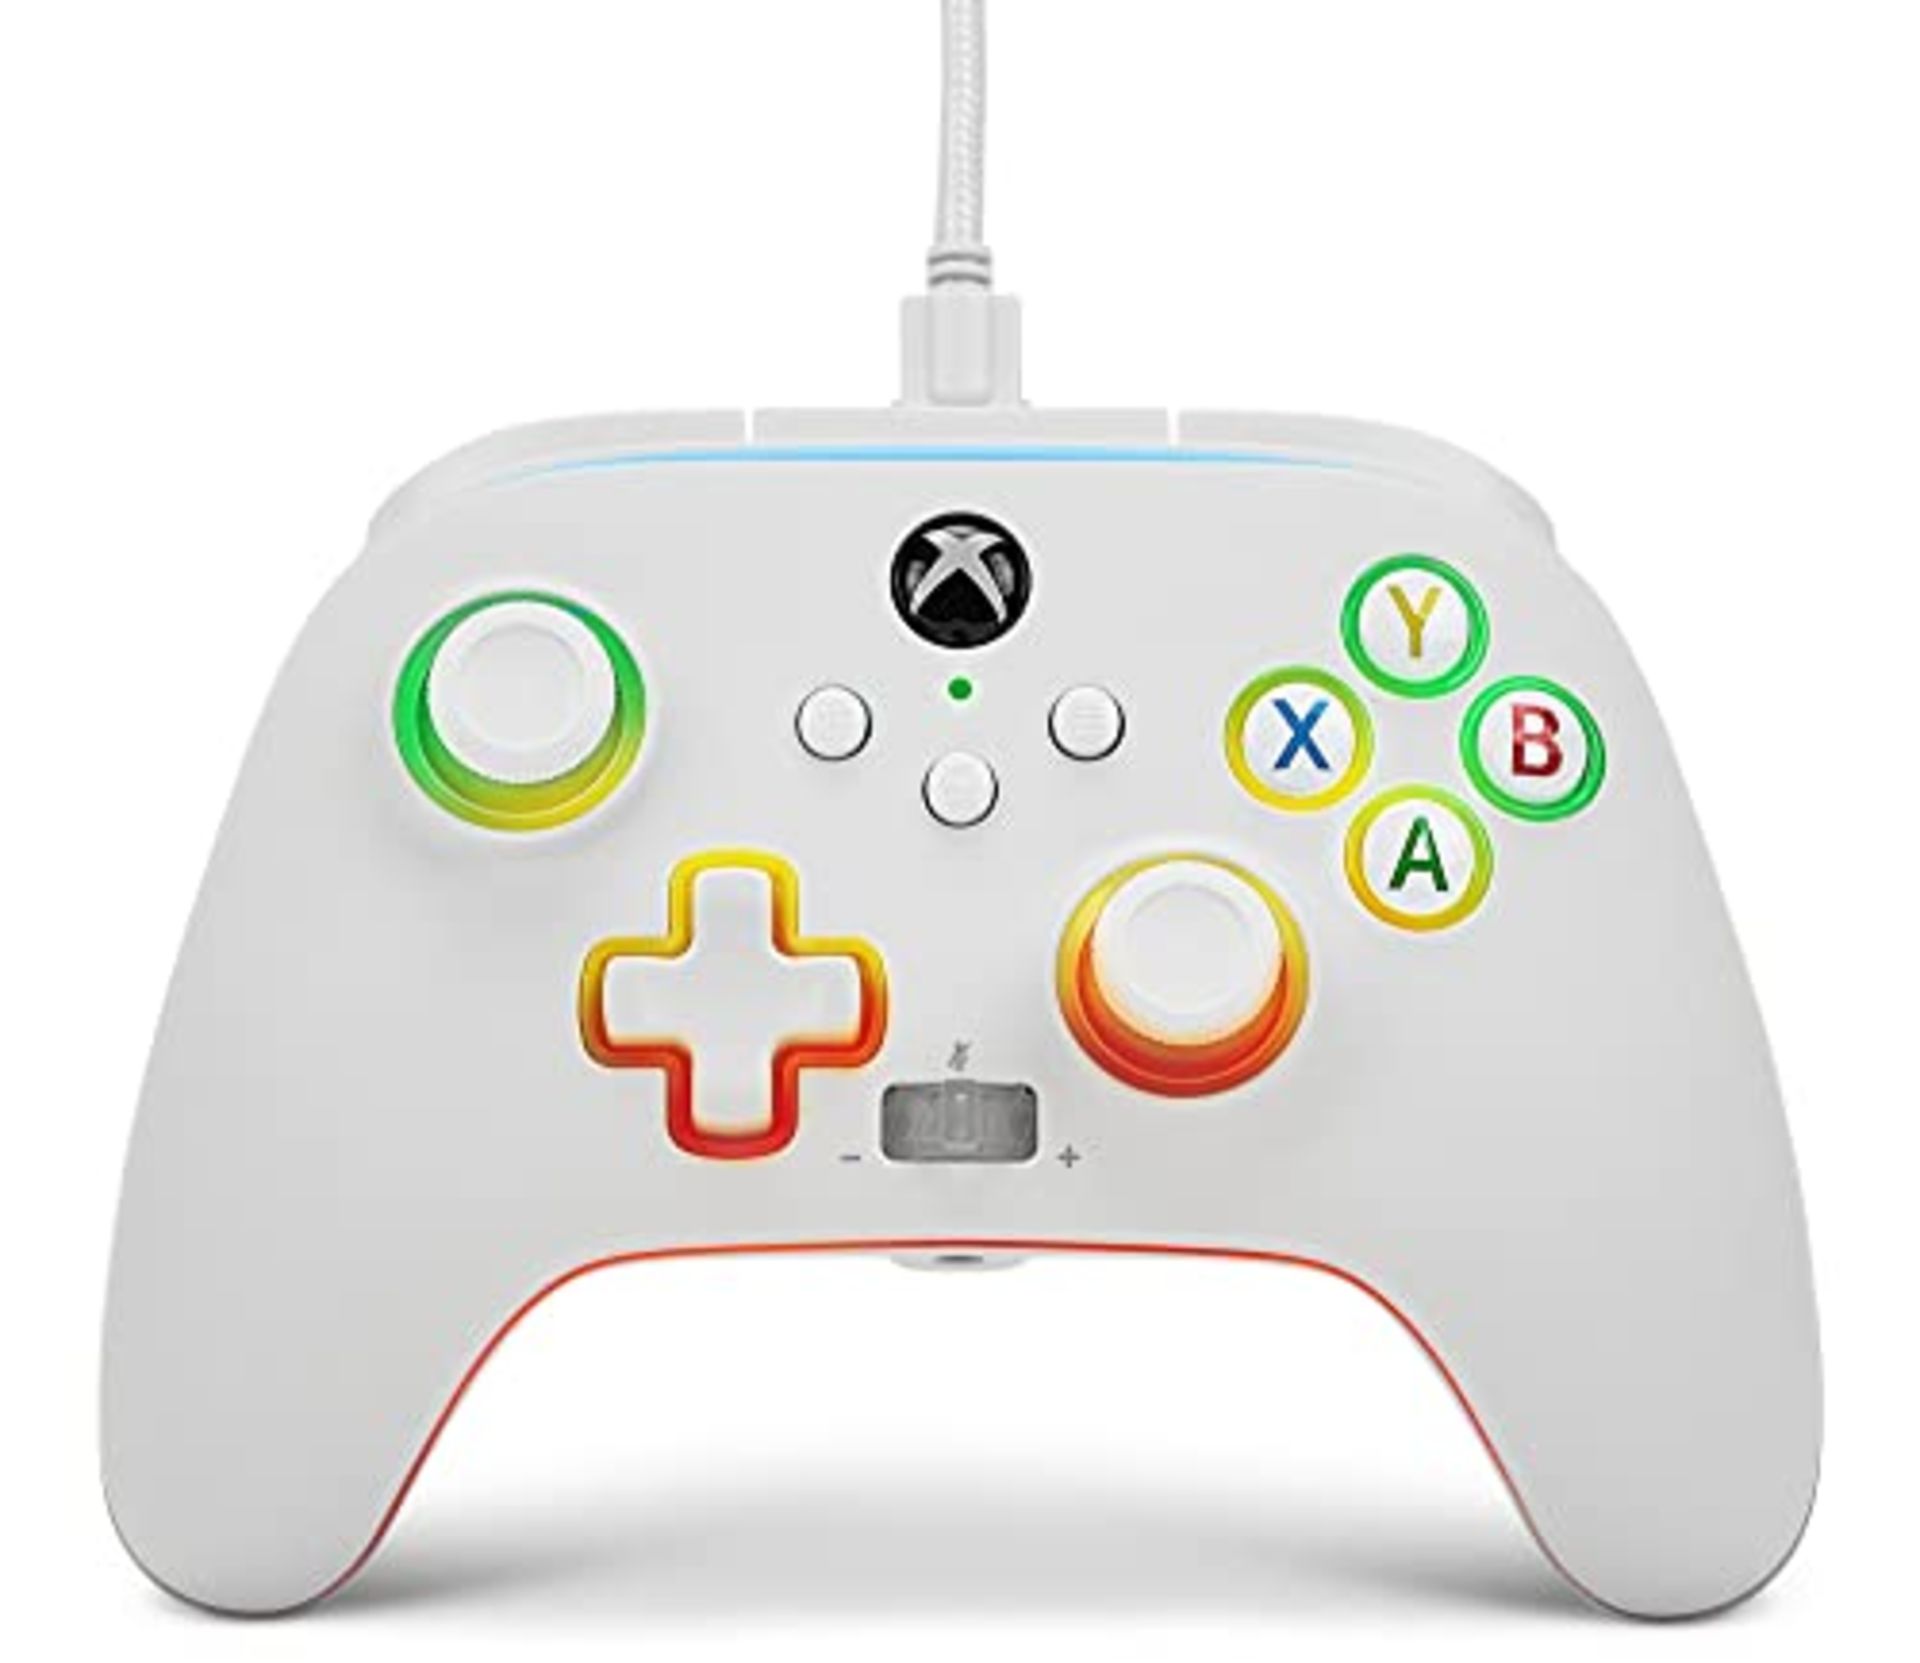 Advanced wired PowerA Spectra Infinity Controller for Xbox Series X|S - White (Amazon